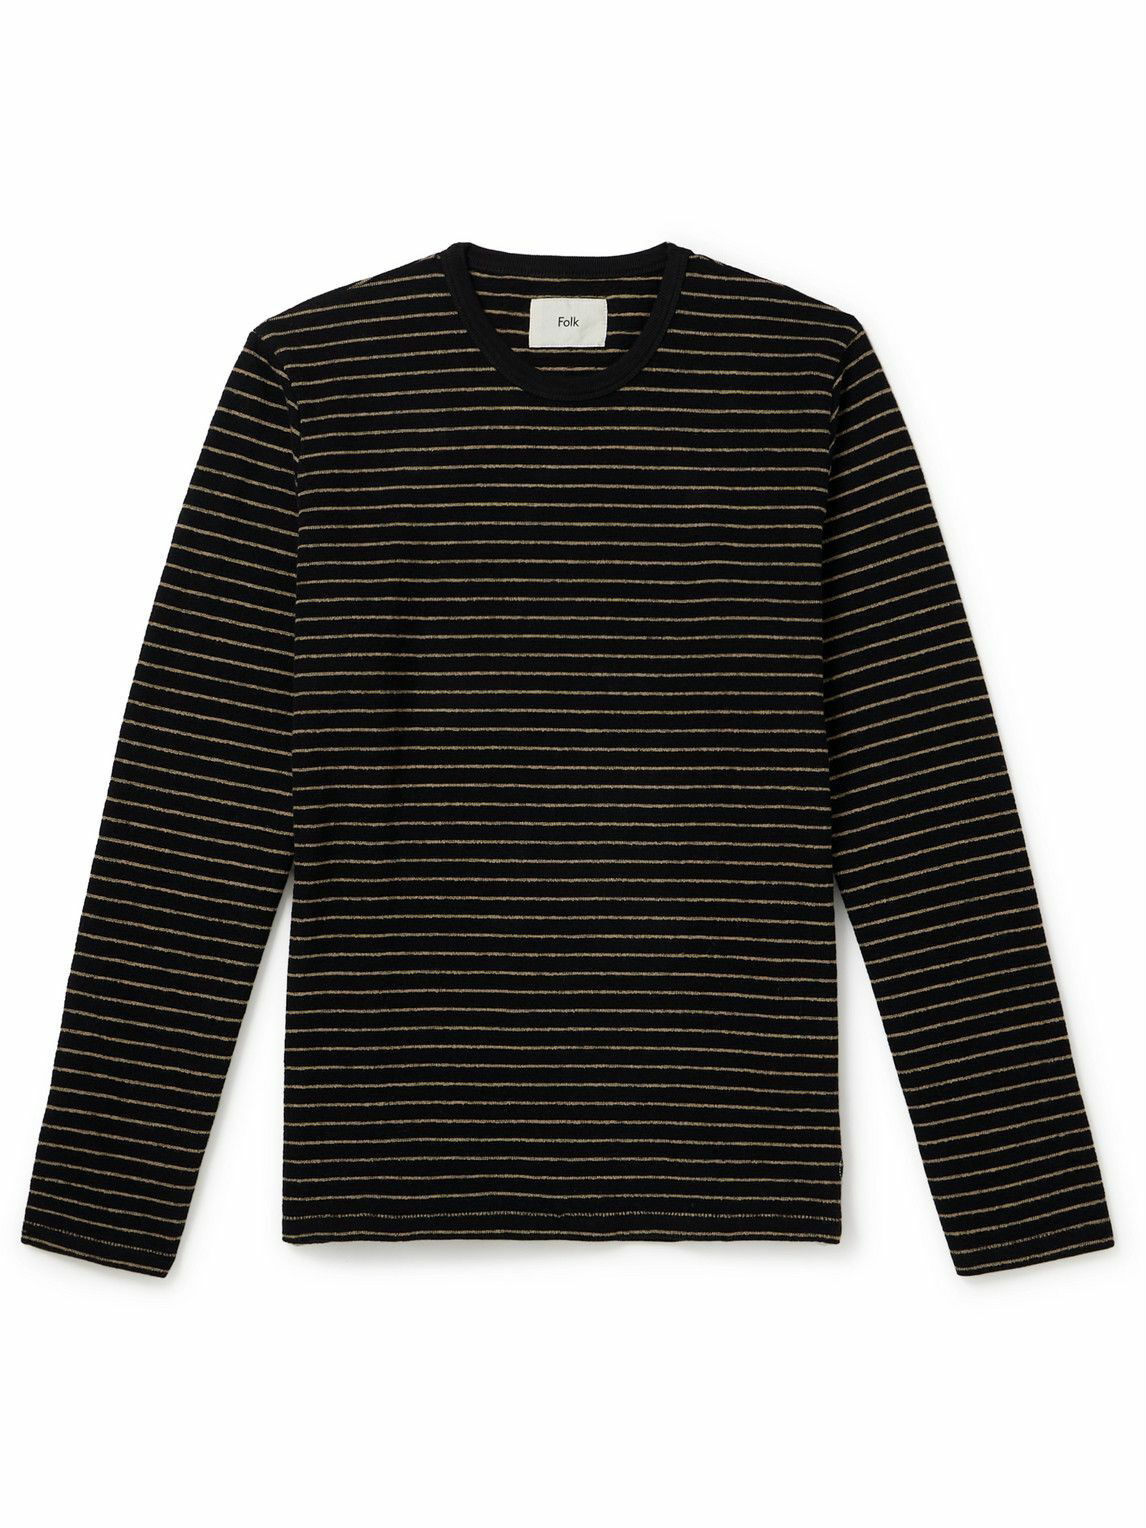 Folk - Striped Cotton T-Shirt - Black Folk